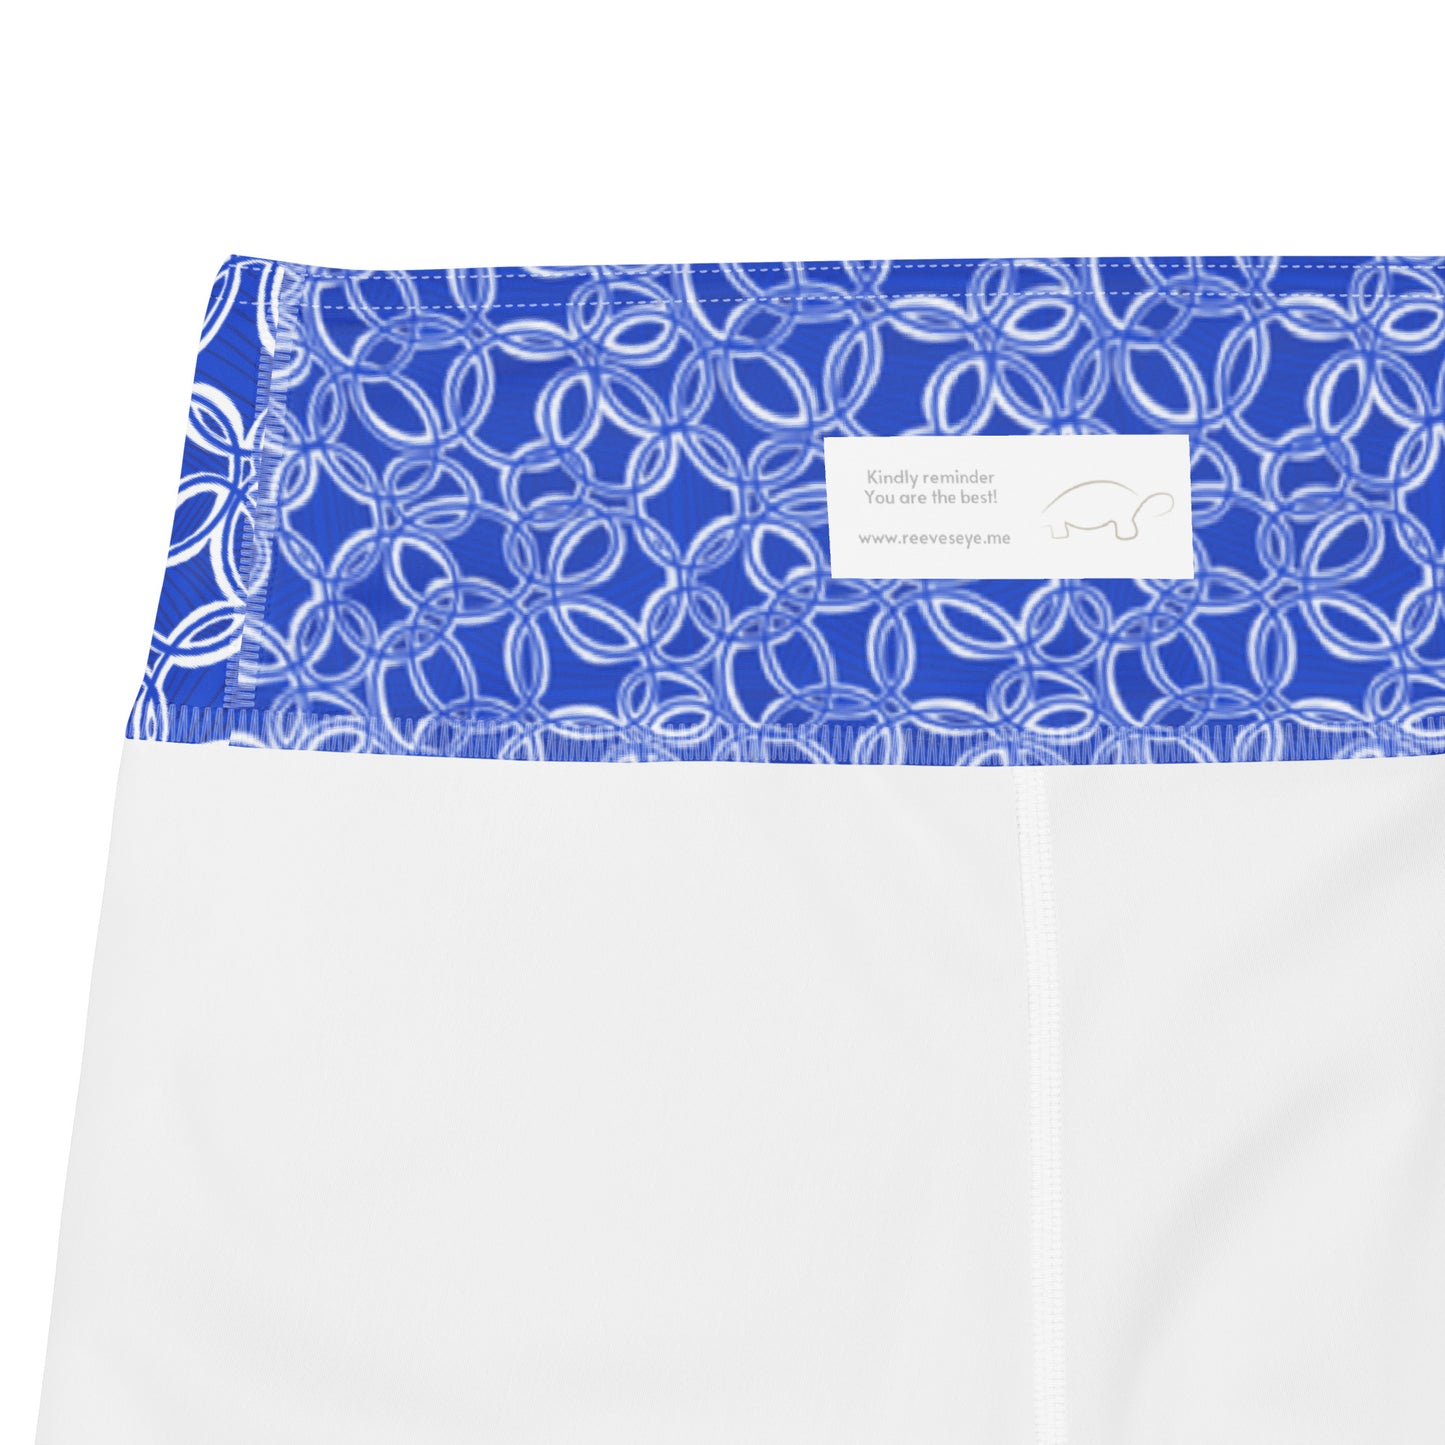 Geometric Blue/White Yoga Shorts. Biking shorts. Design hand-painted by the Designer Maria Alejandra Echenique.